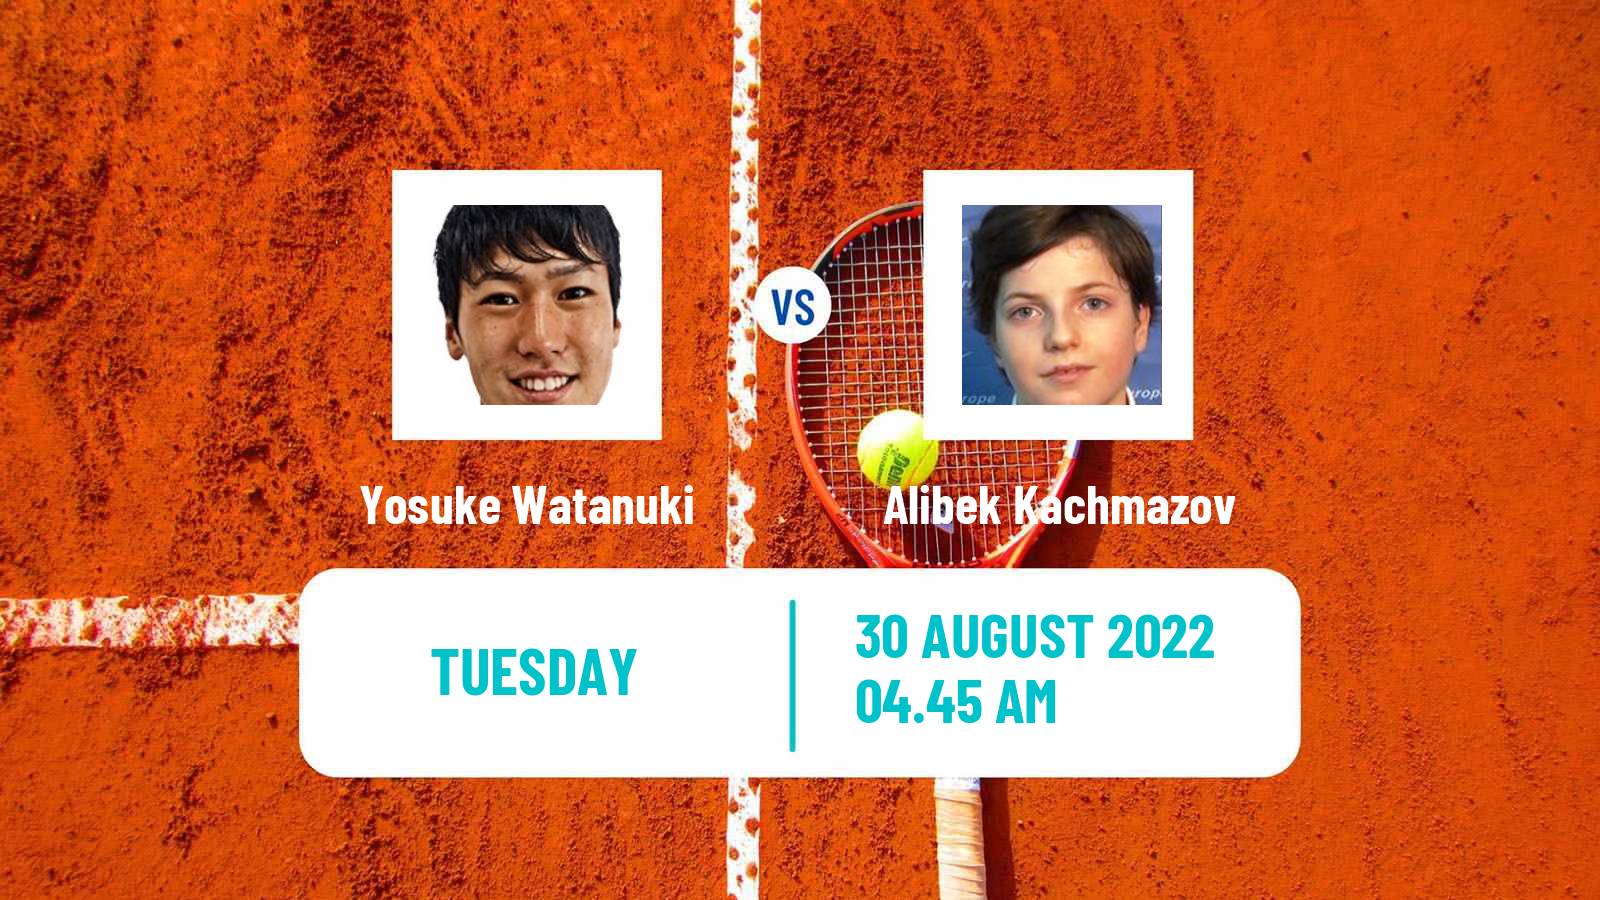 Tennis ATP Challenger Yosuke Watanuki - Alibek Kachmazov